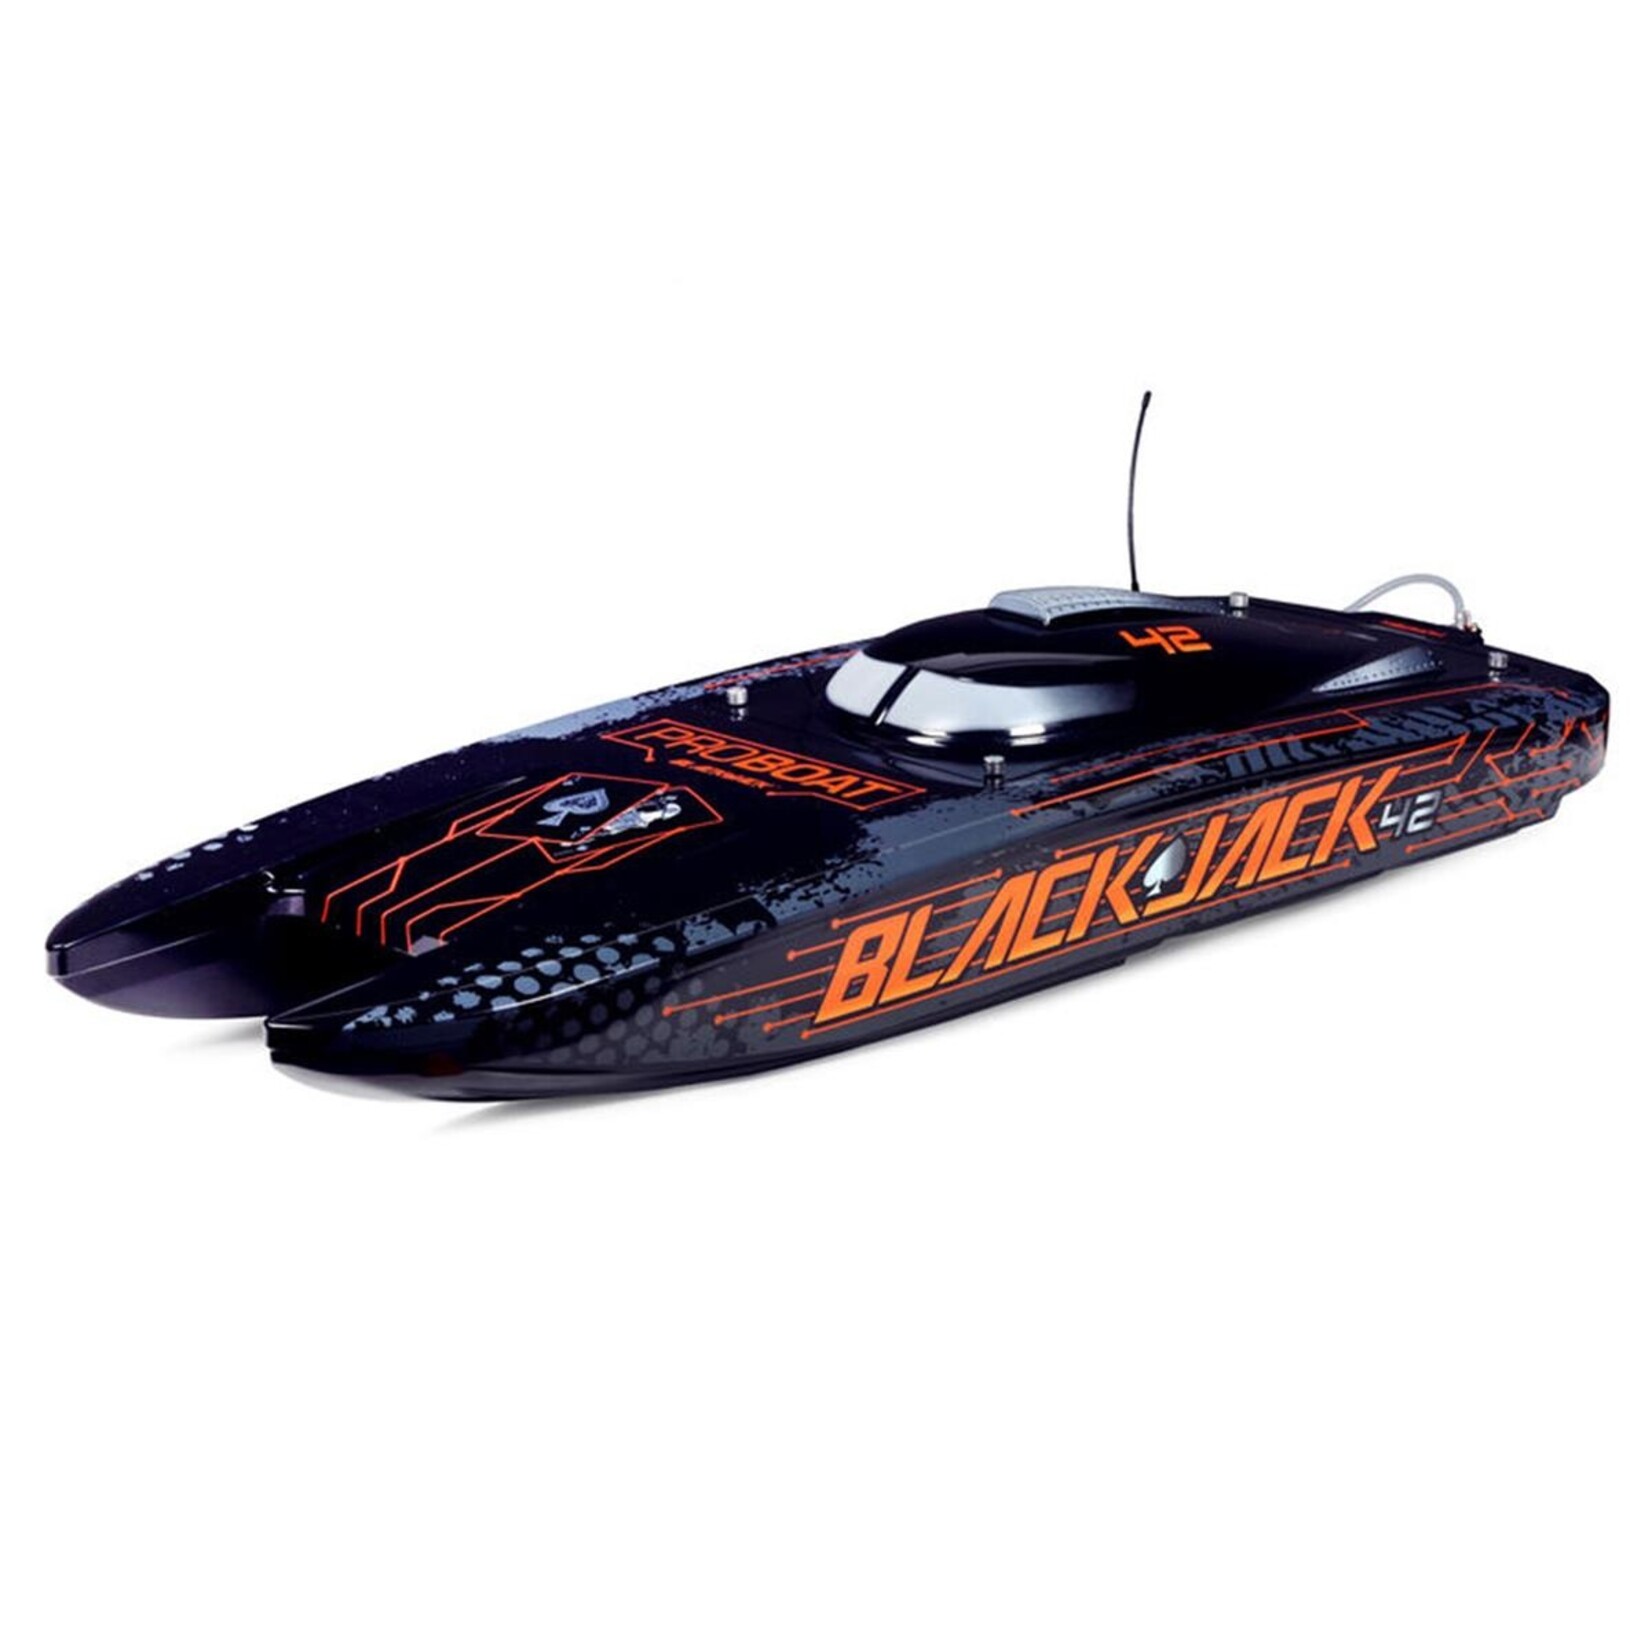 Pro Boat Pro Boat Blackjack 42" 8S Brushless RTR Electric Catamaran (Black/Orange) w/2.4GHz Radio System #PRB08043T1